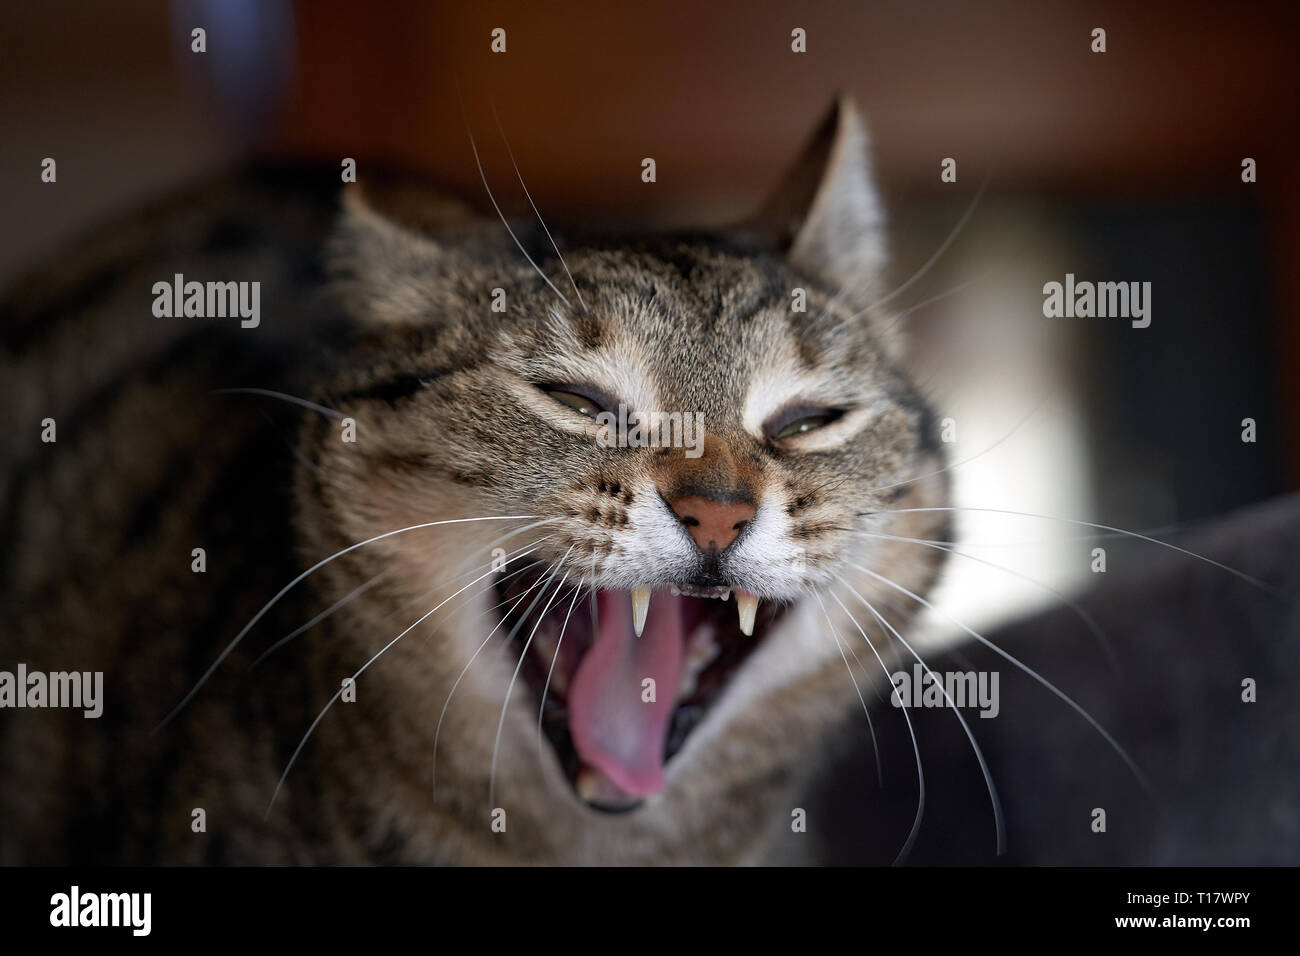 A cat yawn Stock Photo